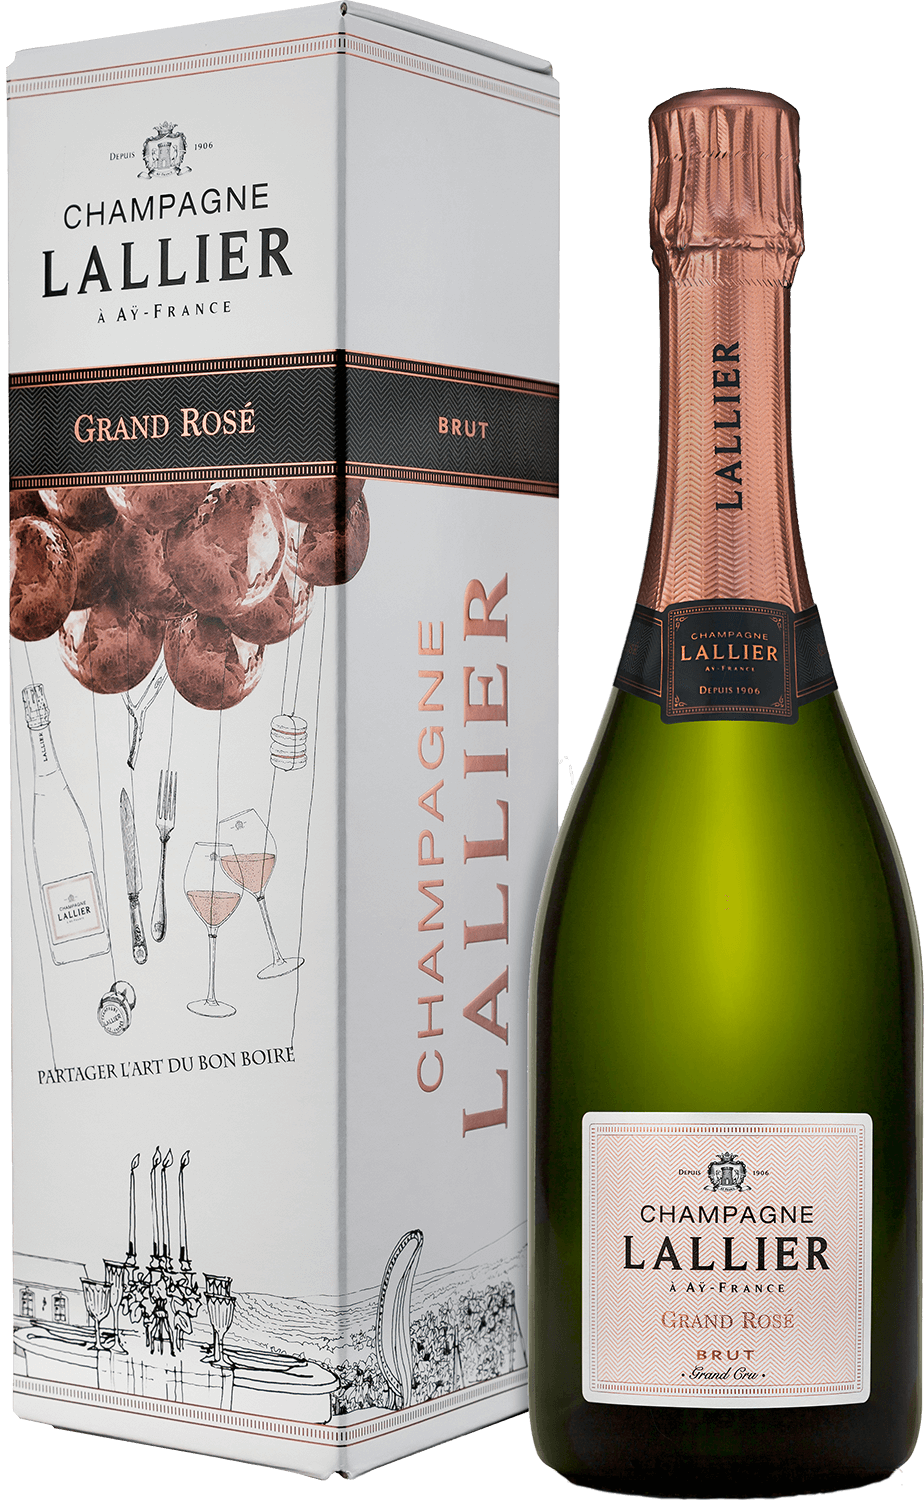 Lallier Grand Rose Brut Grand Cru Champagne AOC (gift box) g h mumm grand cordon champagne aoc brut gift box